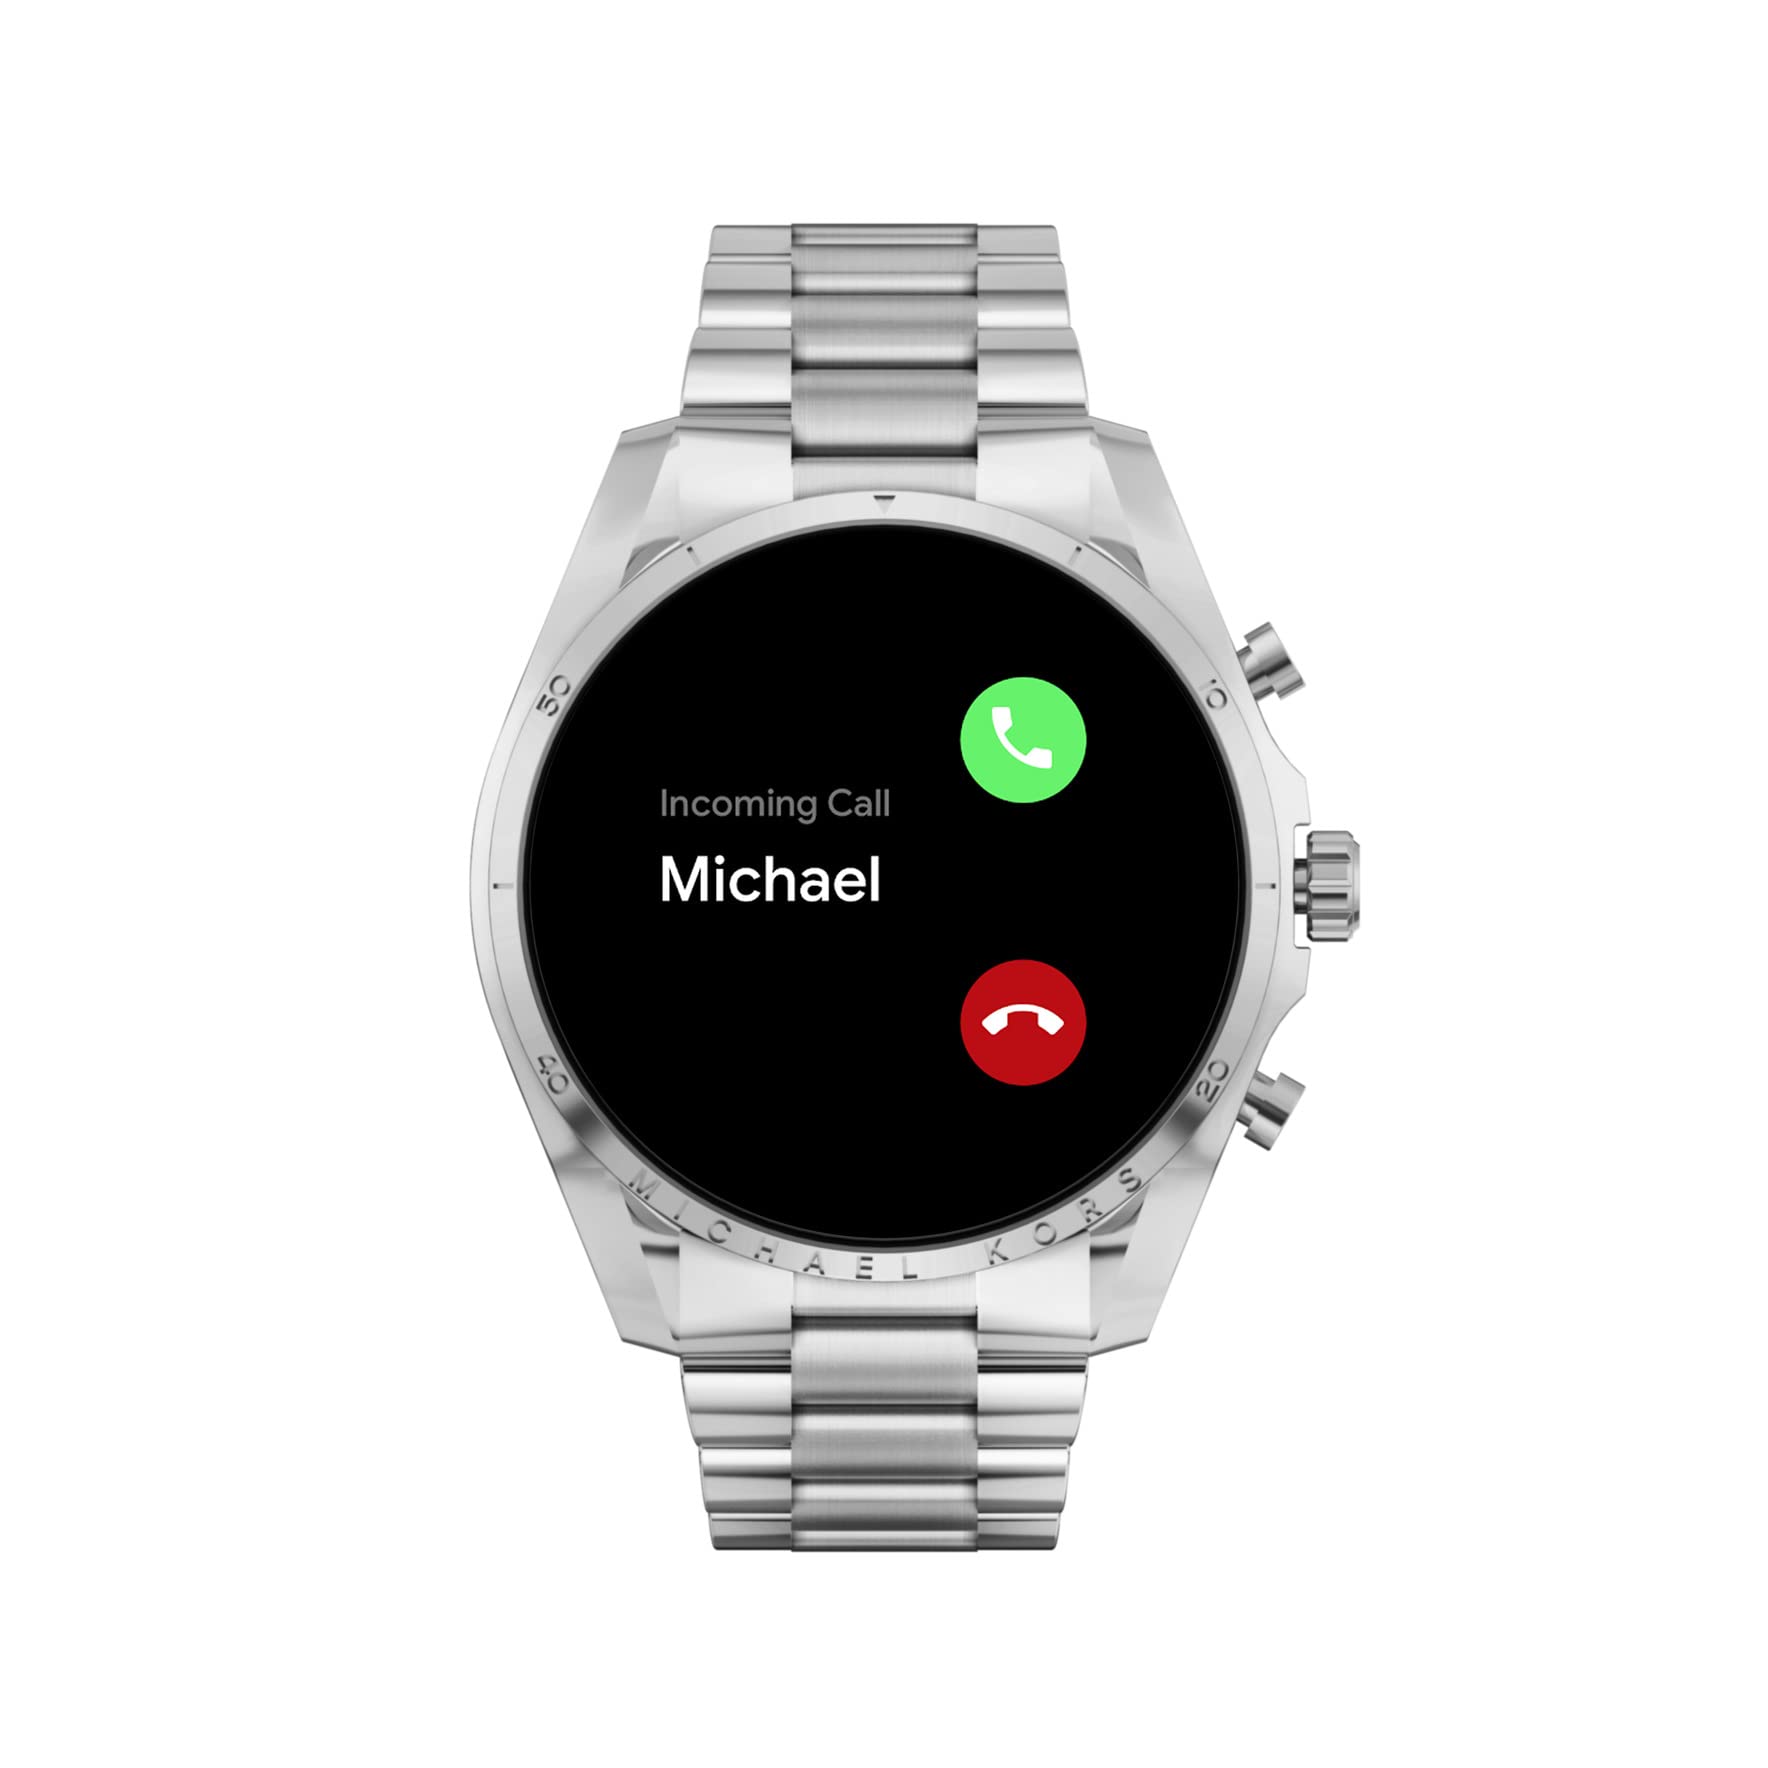 Michael Kors Men's & Women's Gen 6 44mm Touchscreen Smart Watch with Alexa Built-In, Fitness Tracker, Sleep Tracker, Heart Rate Monitor, GPS, Music Control, Smartphone Notifications